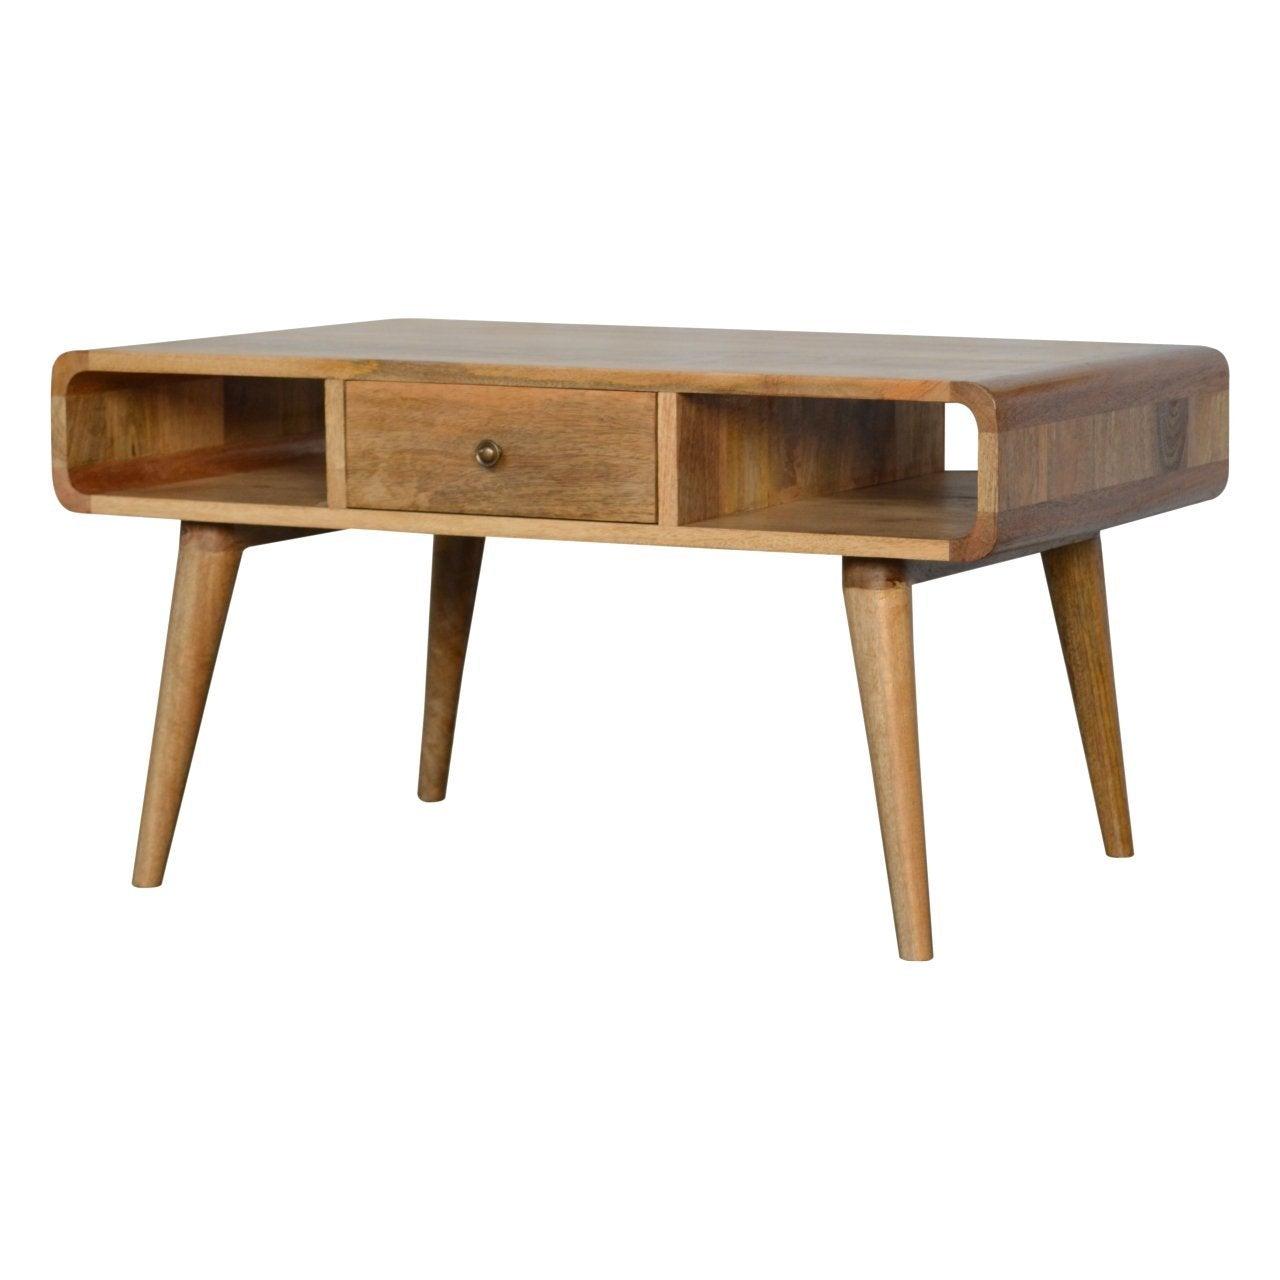 Curved oak-ish coffee table - crimblefest furniture - image 4